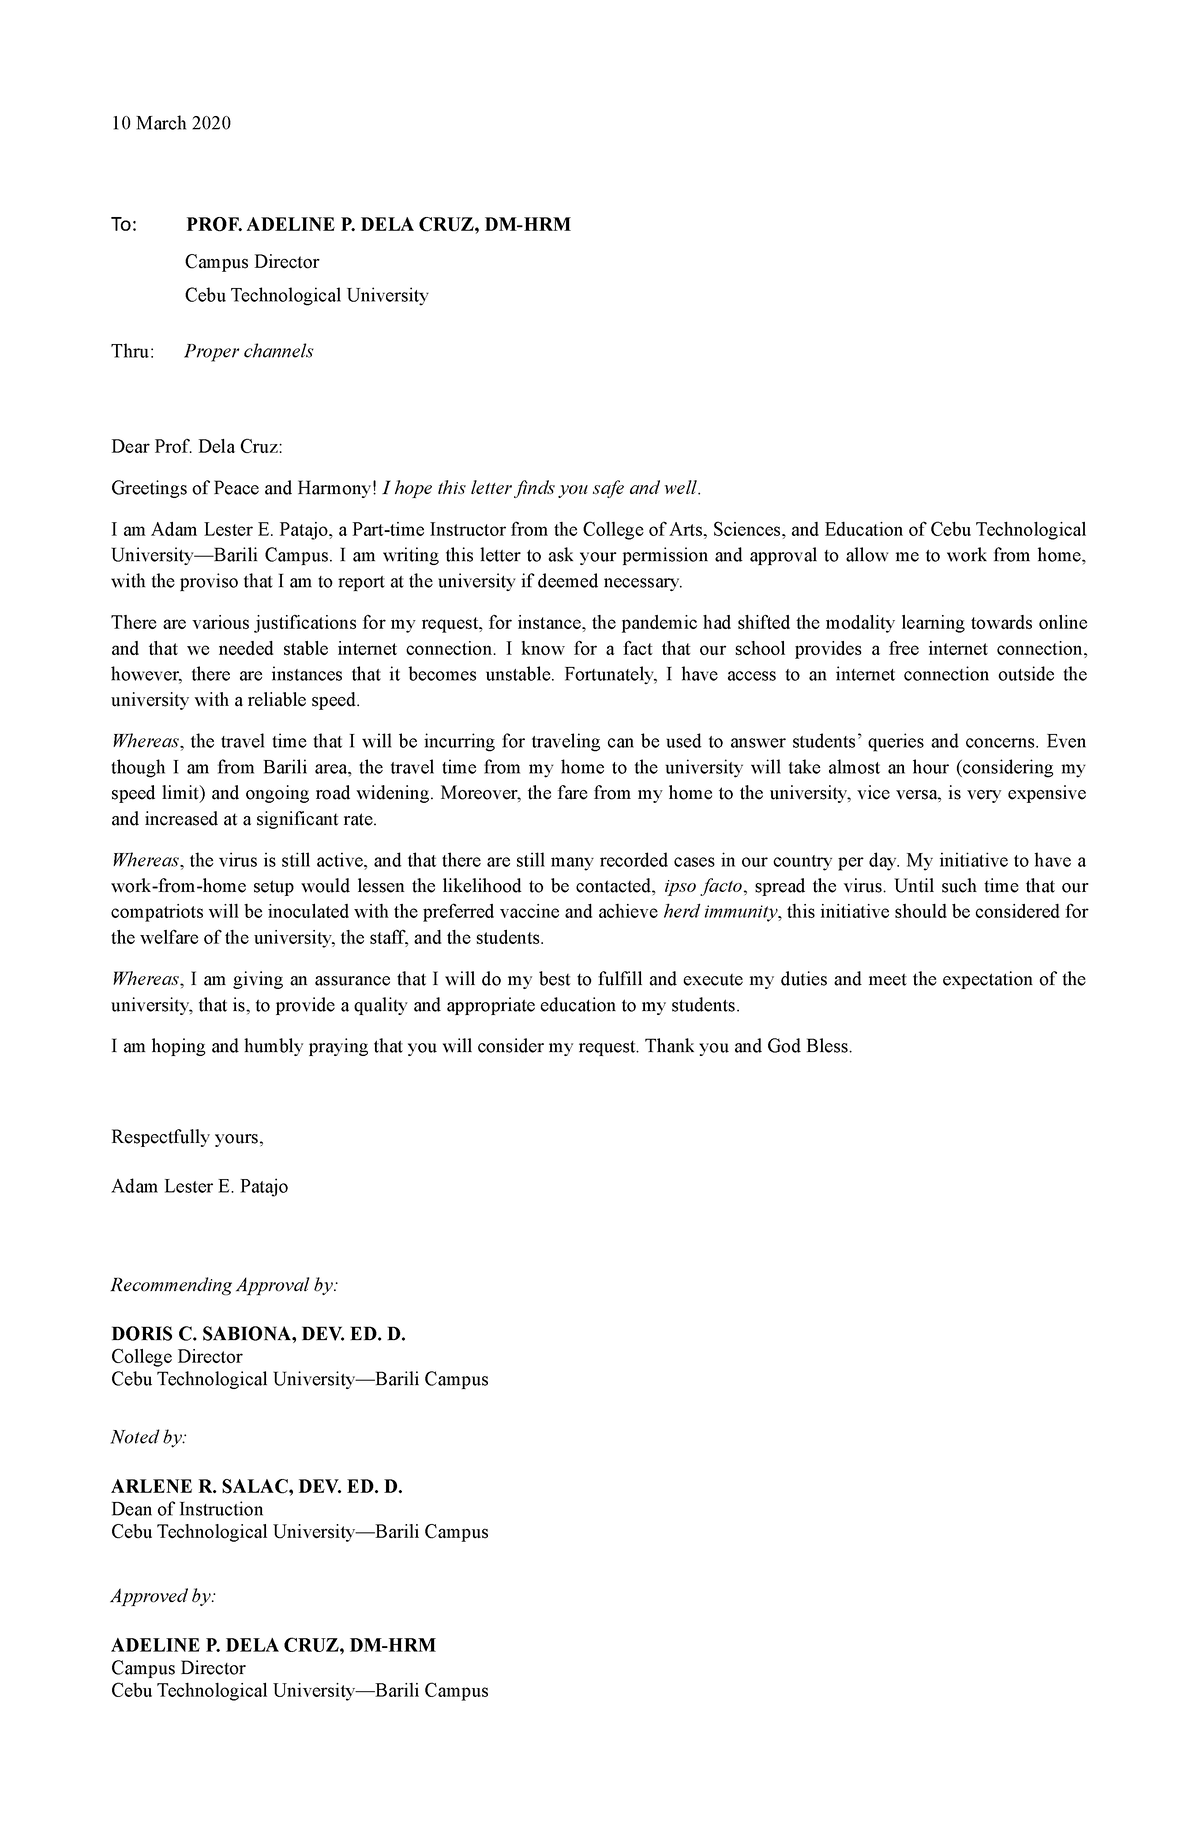 Request Letter WFH SEM 2 - 10 March 2020 To: PROF. ADELINE P. DELA CRUZ ...